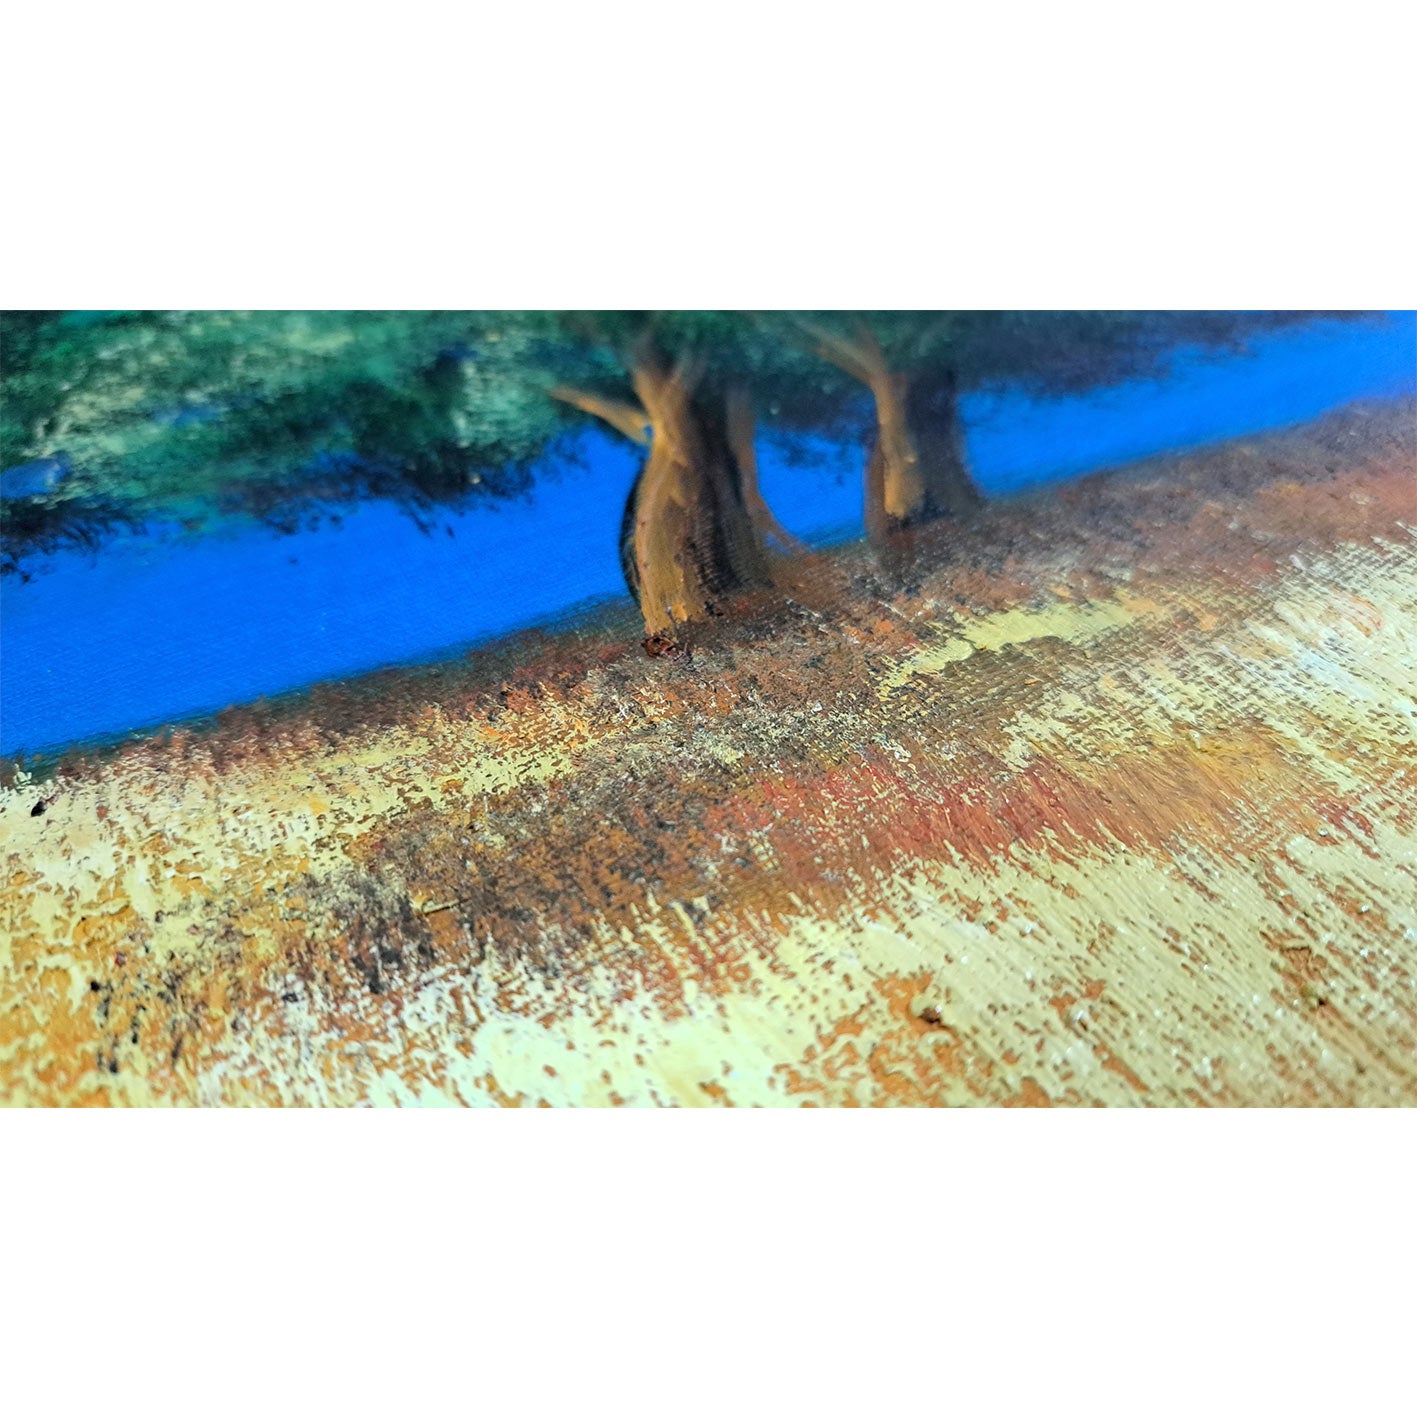 Meadow Tree Painting 60x50 cm